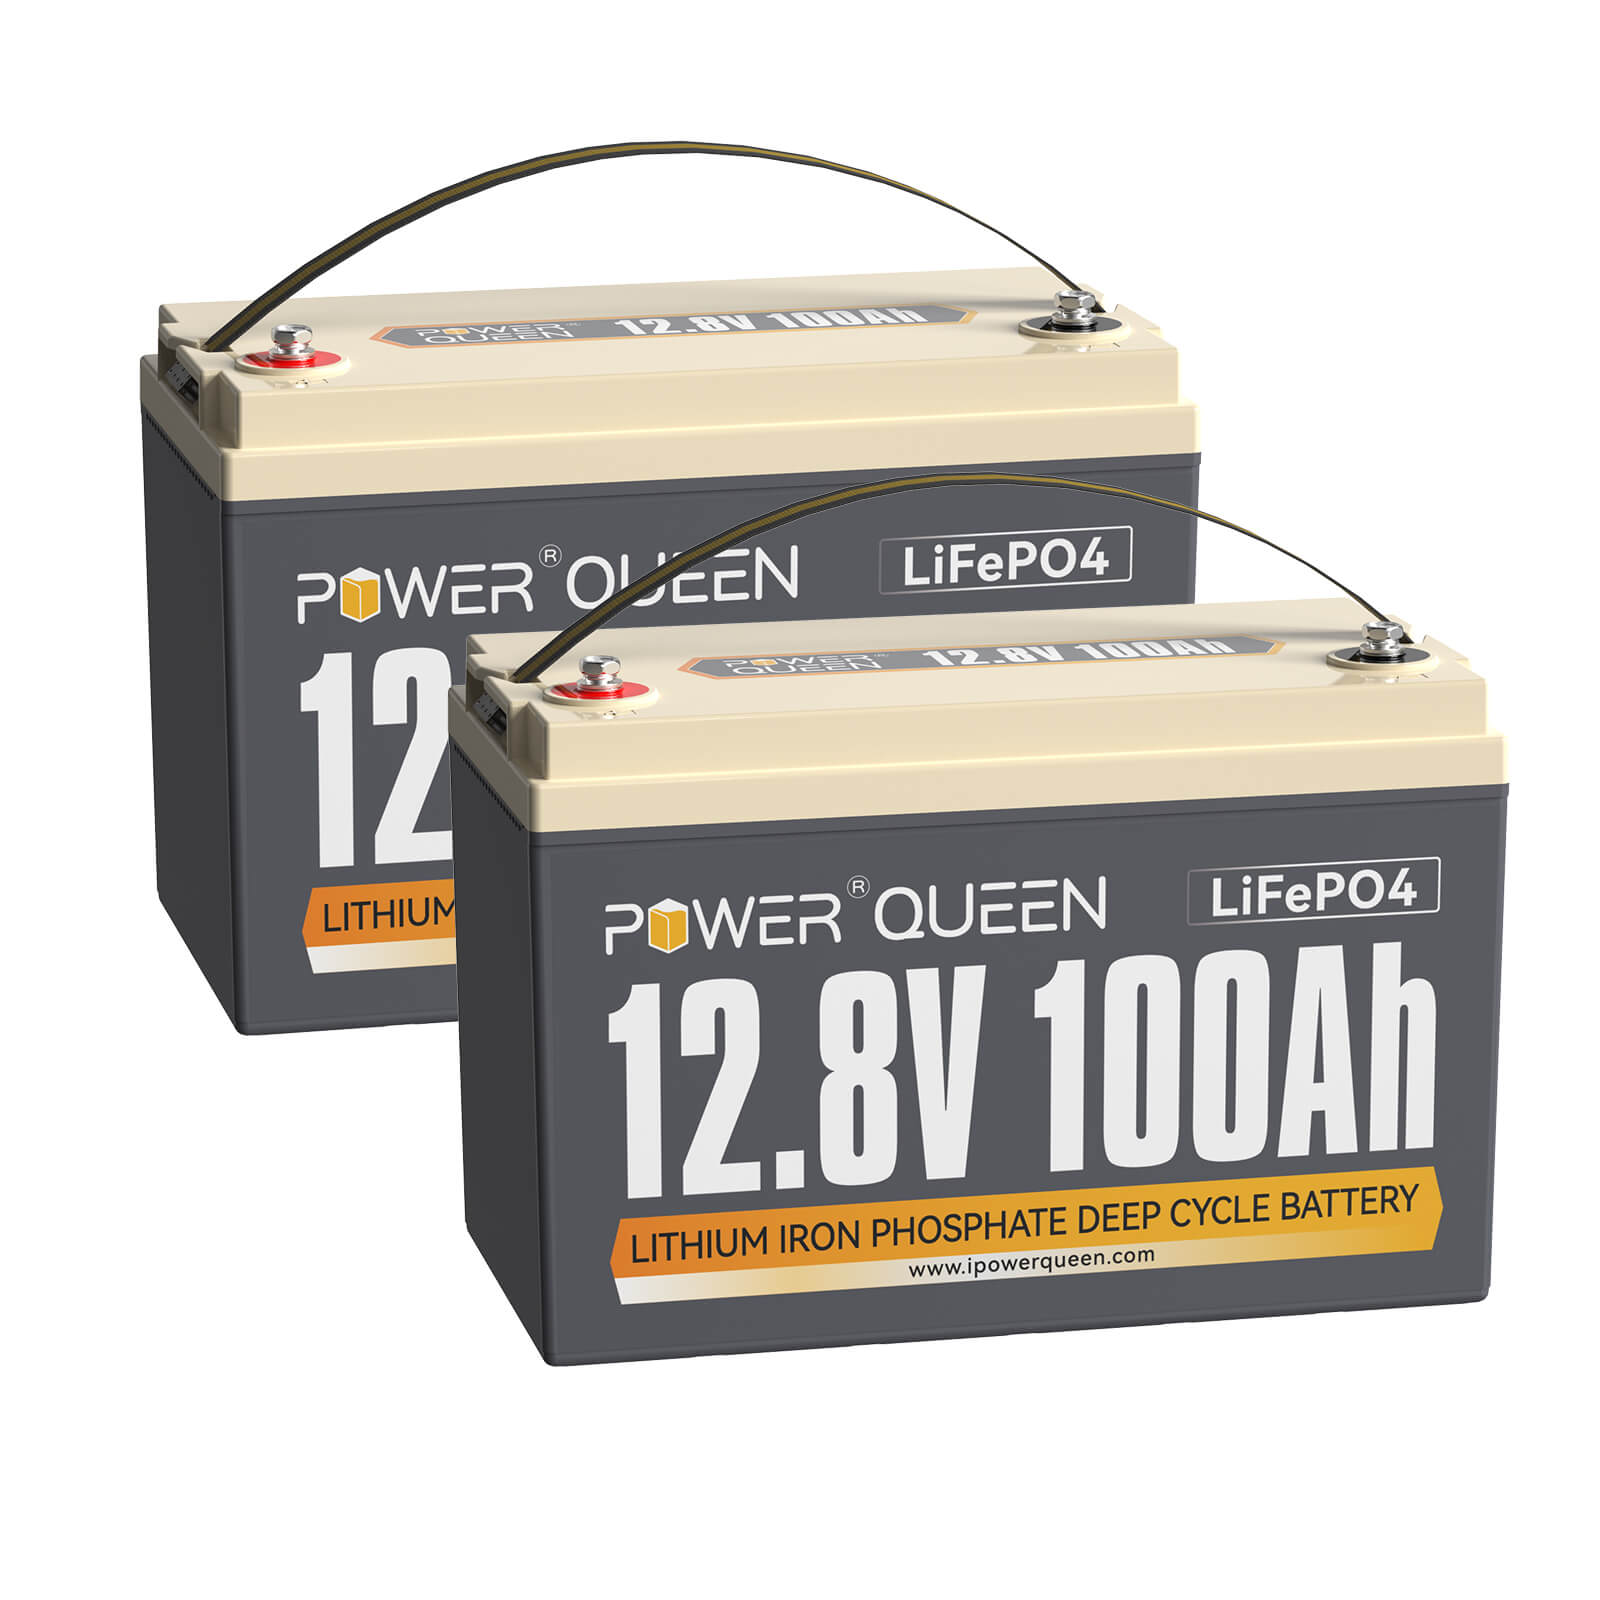 Power Queen 12,8V 100Ah LiFePO4 Batterie, Eingebautes 100A BMS